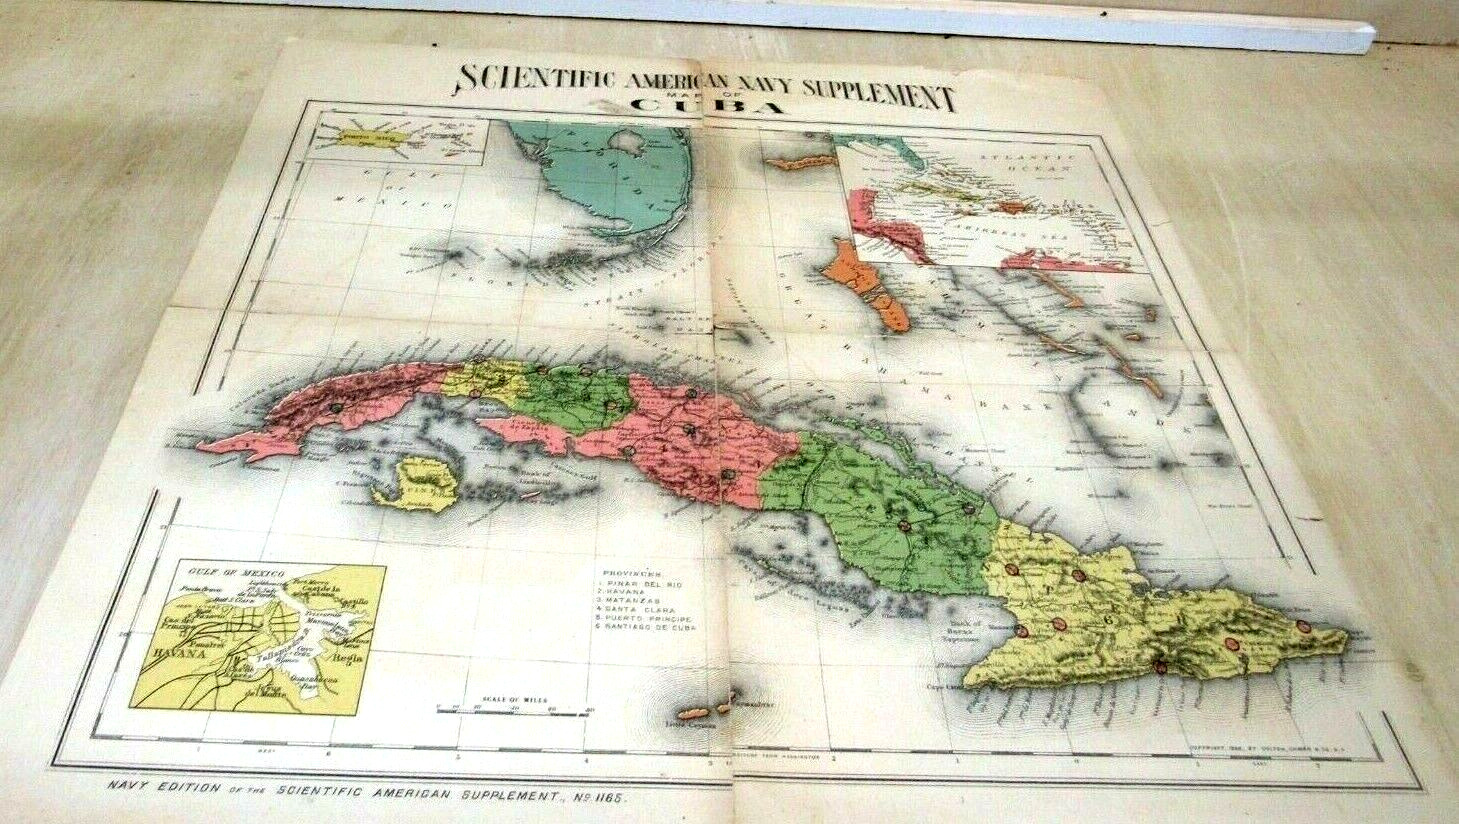 1898 SCIENTIFIC AMERICAN NAVY SUPPLEMENT MAP OF CUBA COLTON, OHMAN m41